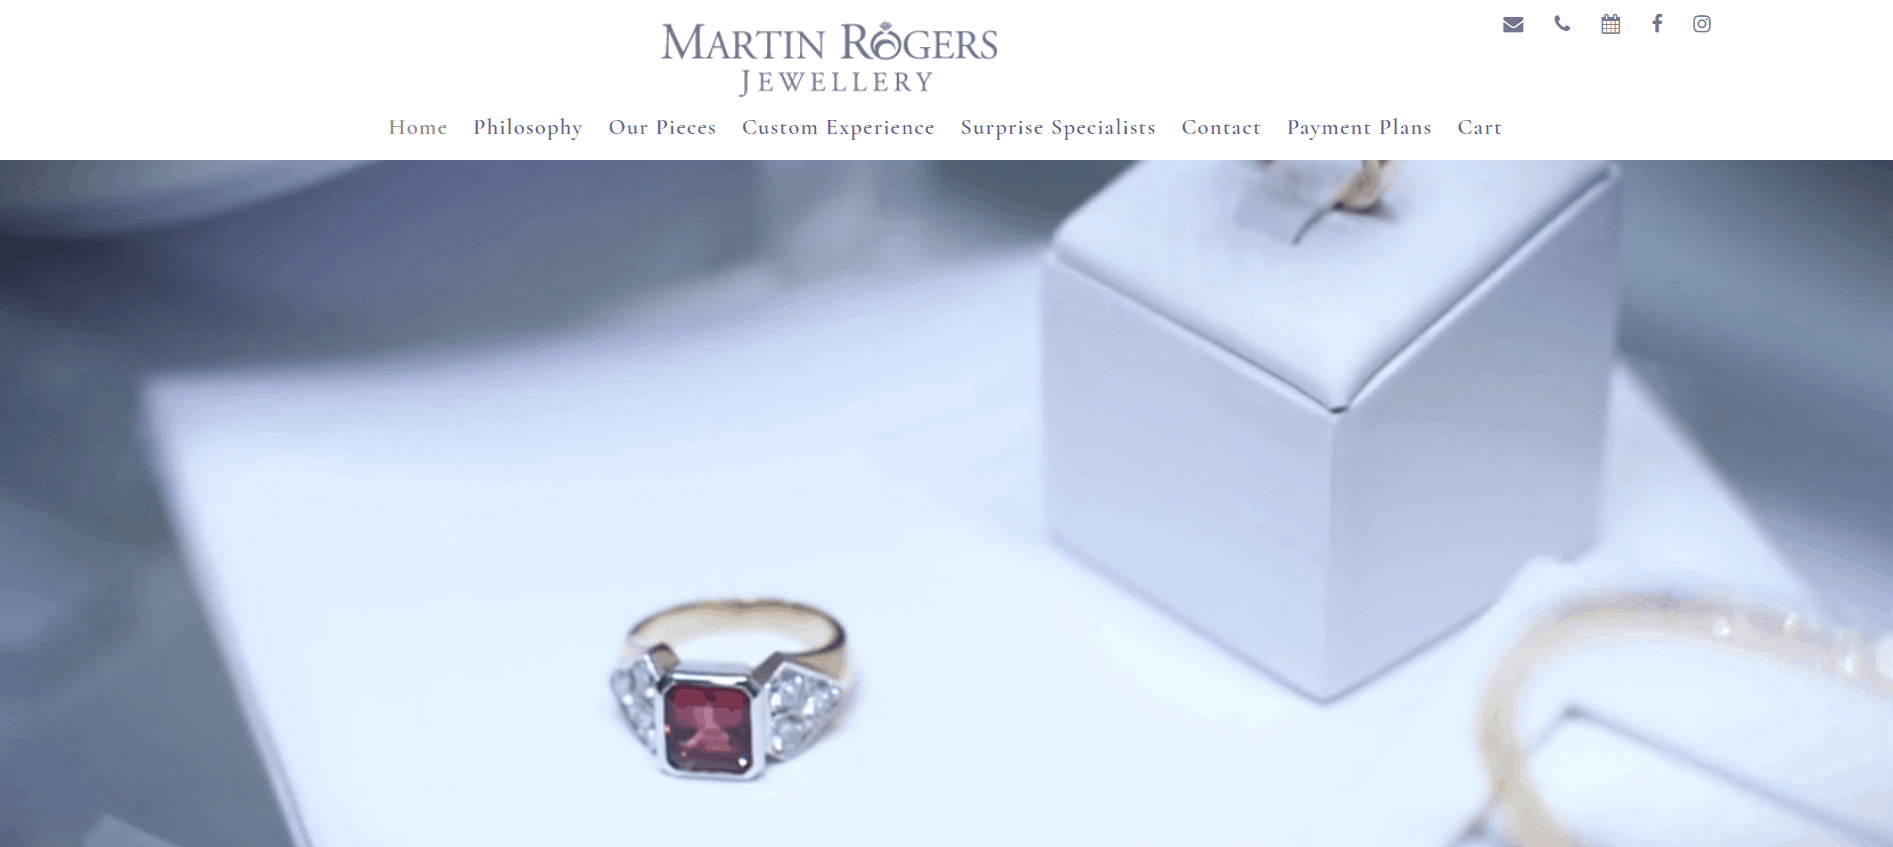 Martin Rogers Jewellery